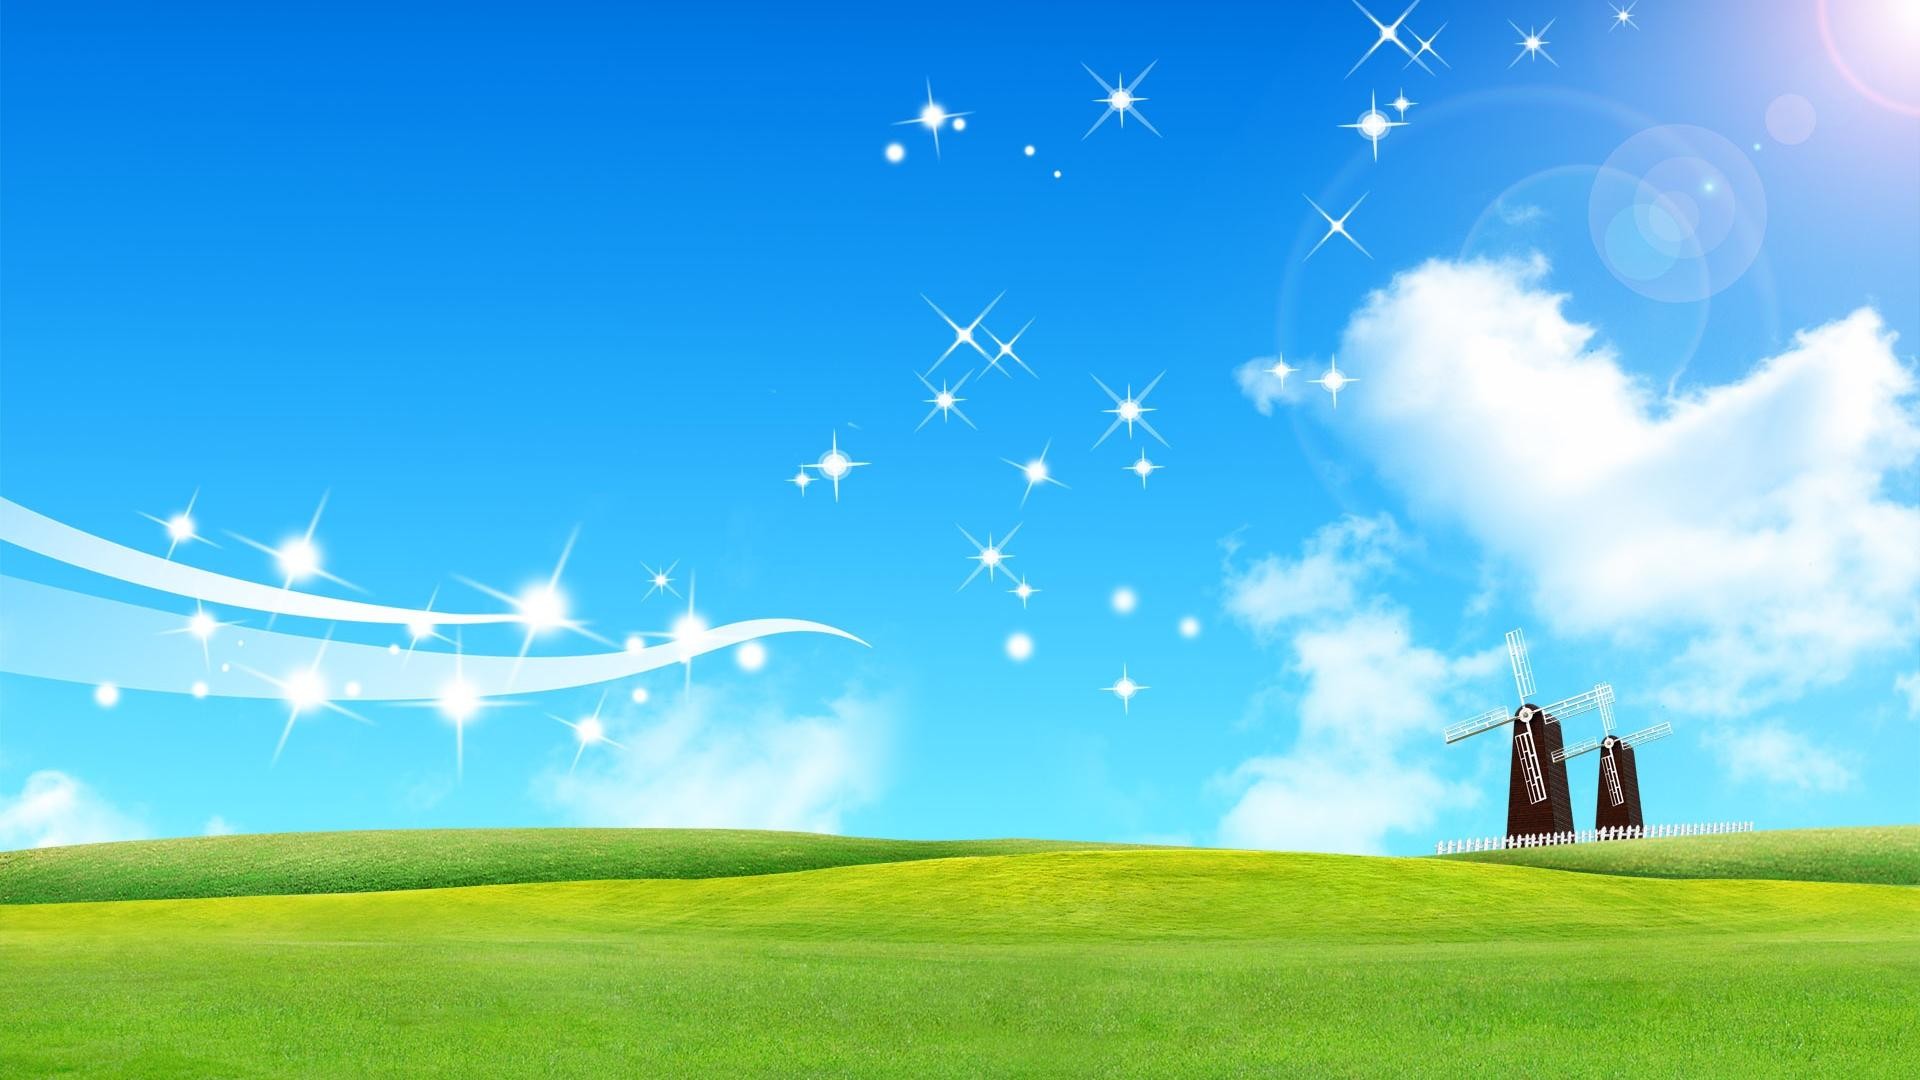 1920x1080  Hd beautiful cartoon blue sky and grassland backgrounds wide  wallpapers:1280x800,1440x900,